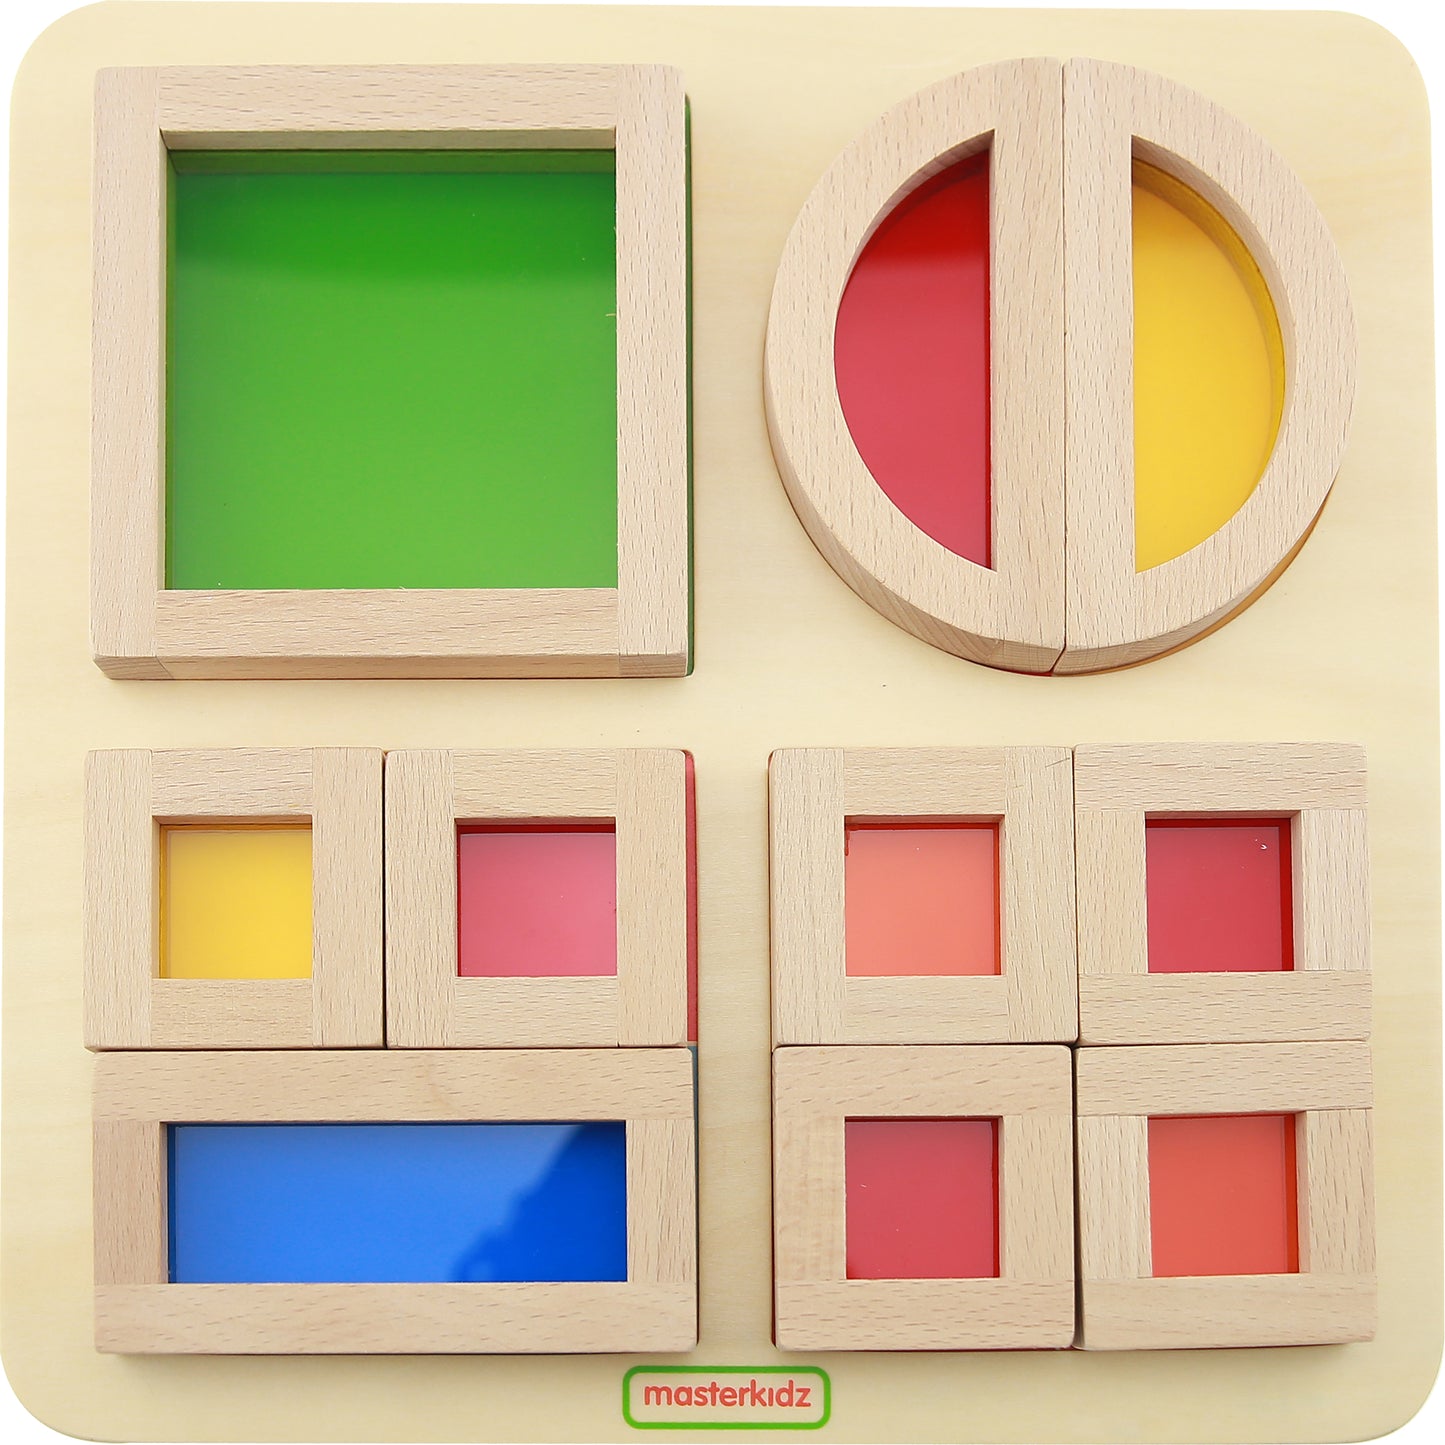 Masterkidz Rainbow Block Set 透視色彩積木遊戲學習版